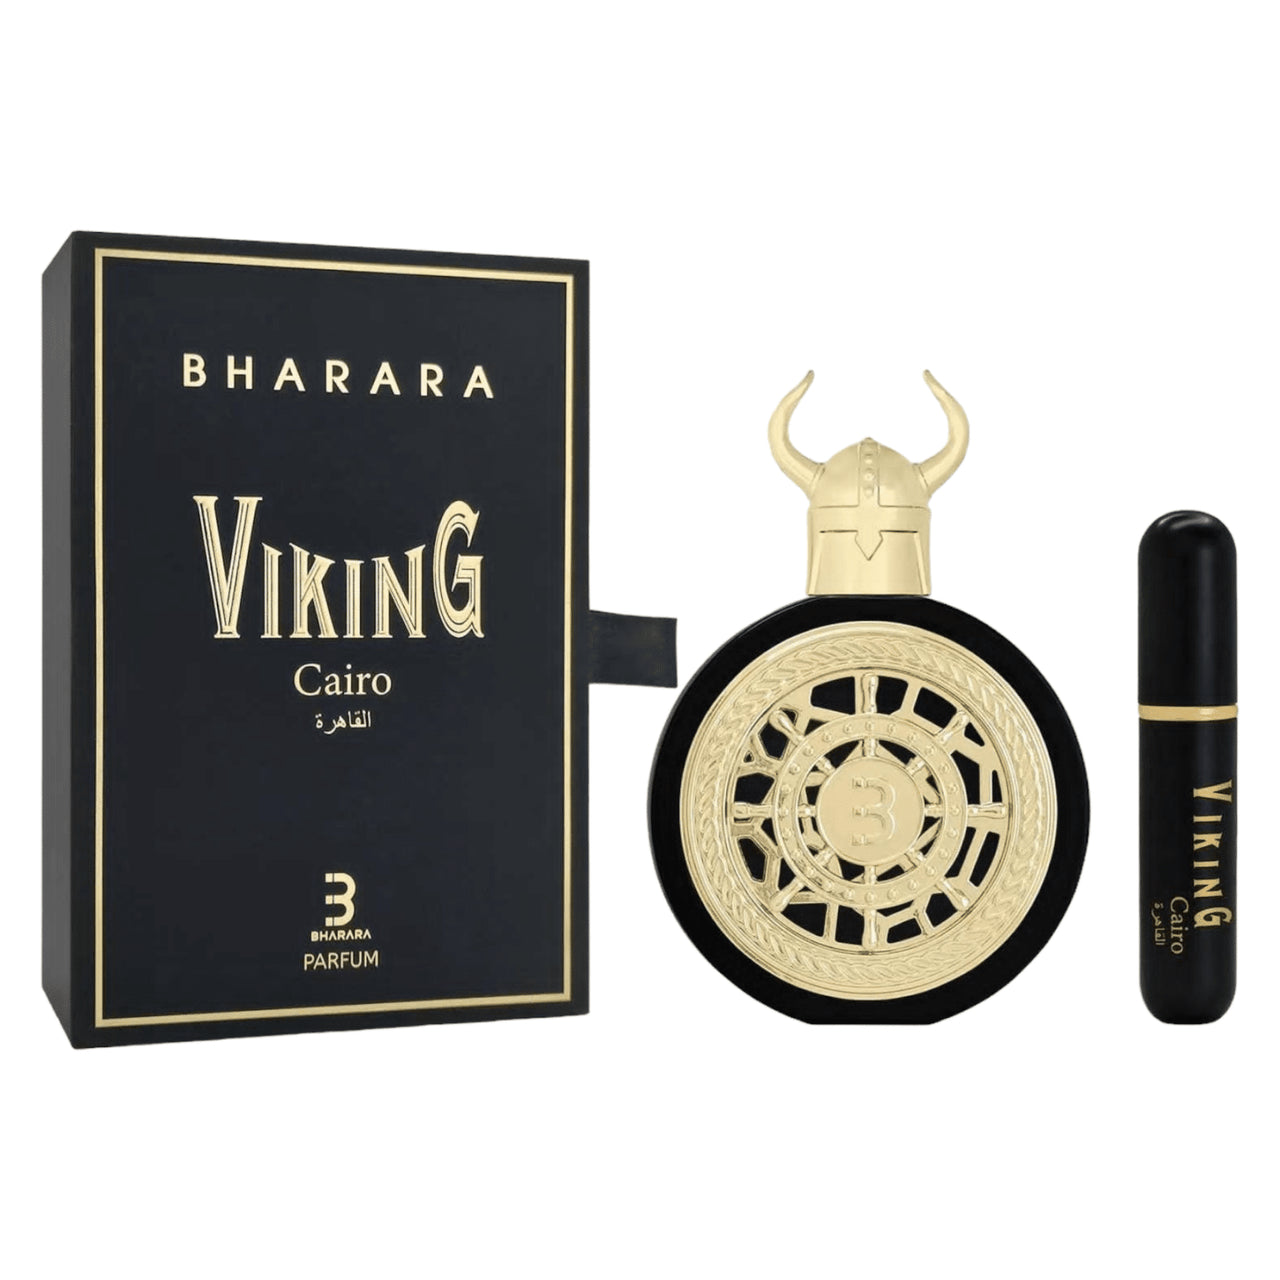 Bharara Viking Cairo Dubai Parfum 3.4 oz 100 ml Spray Unisex